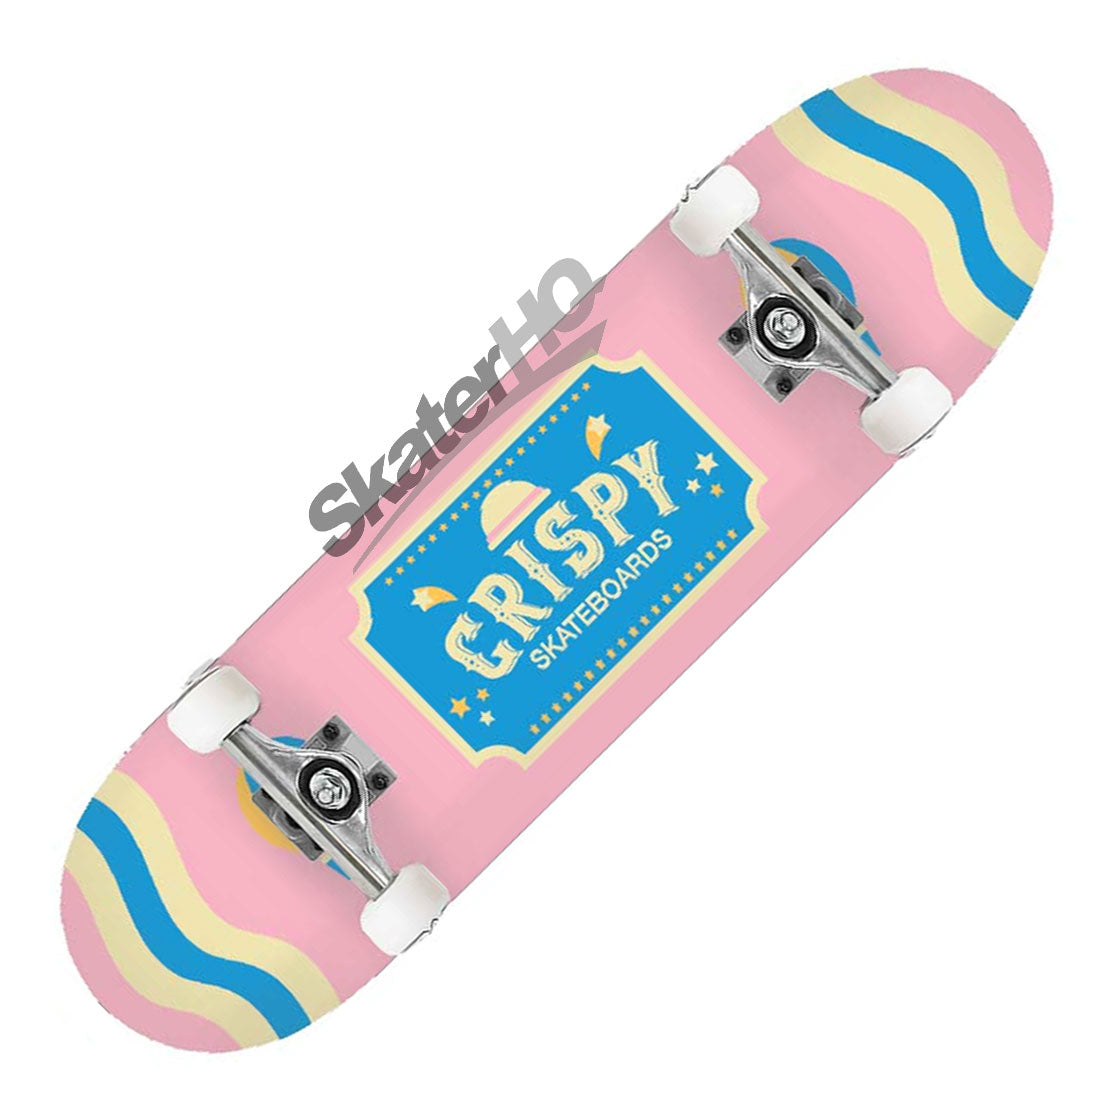 Crispy Rookie Circus 7.25 Mini Complete - Pink Skateboard Completes Modern Street